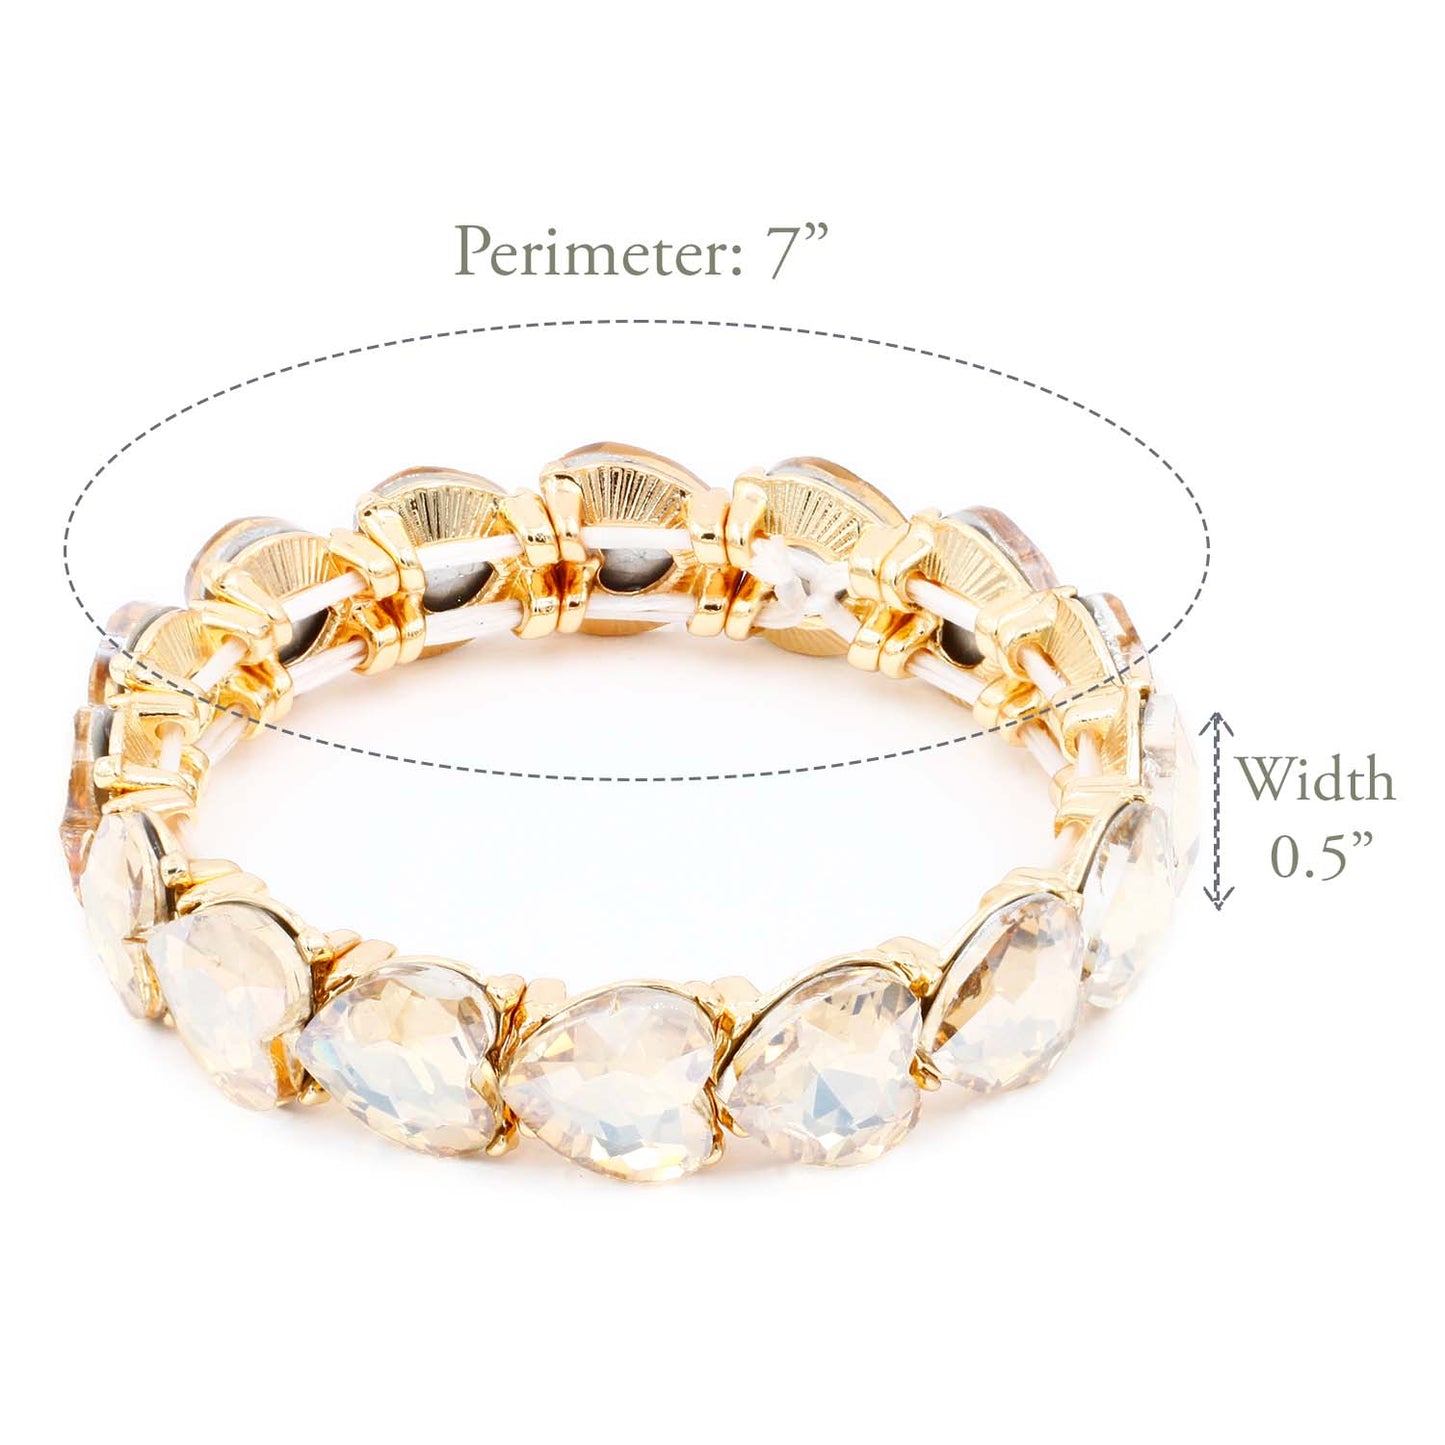 Lavencious Heart Shape Rhinestones Elastic Stretch Bracelet for Women (Gold Topaz)